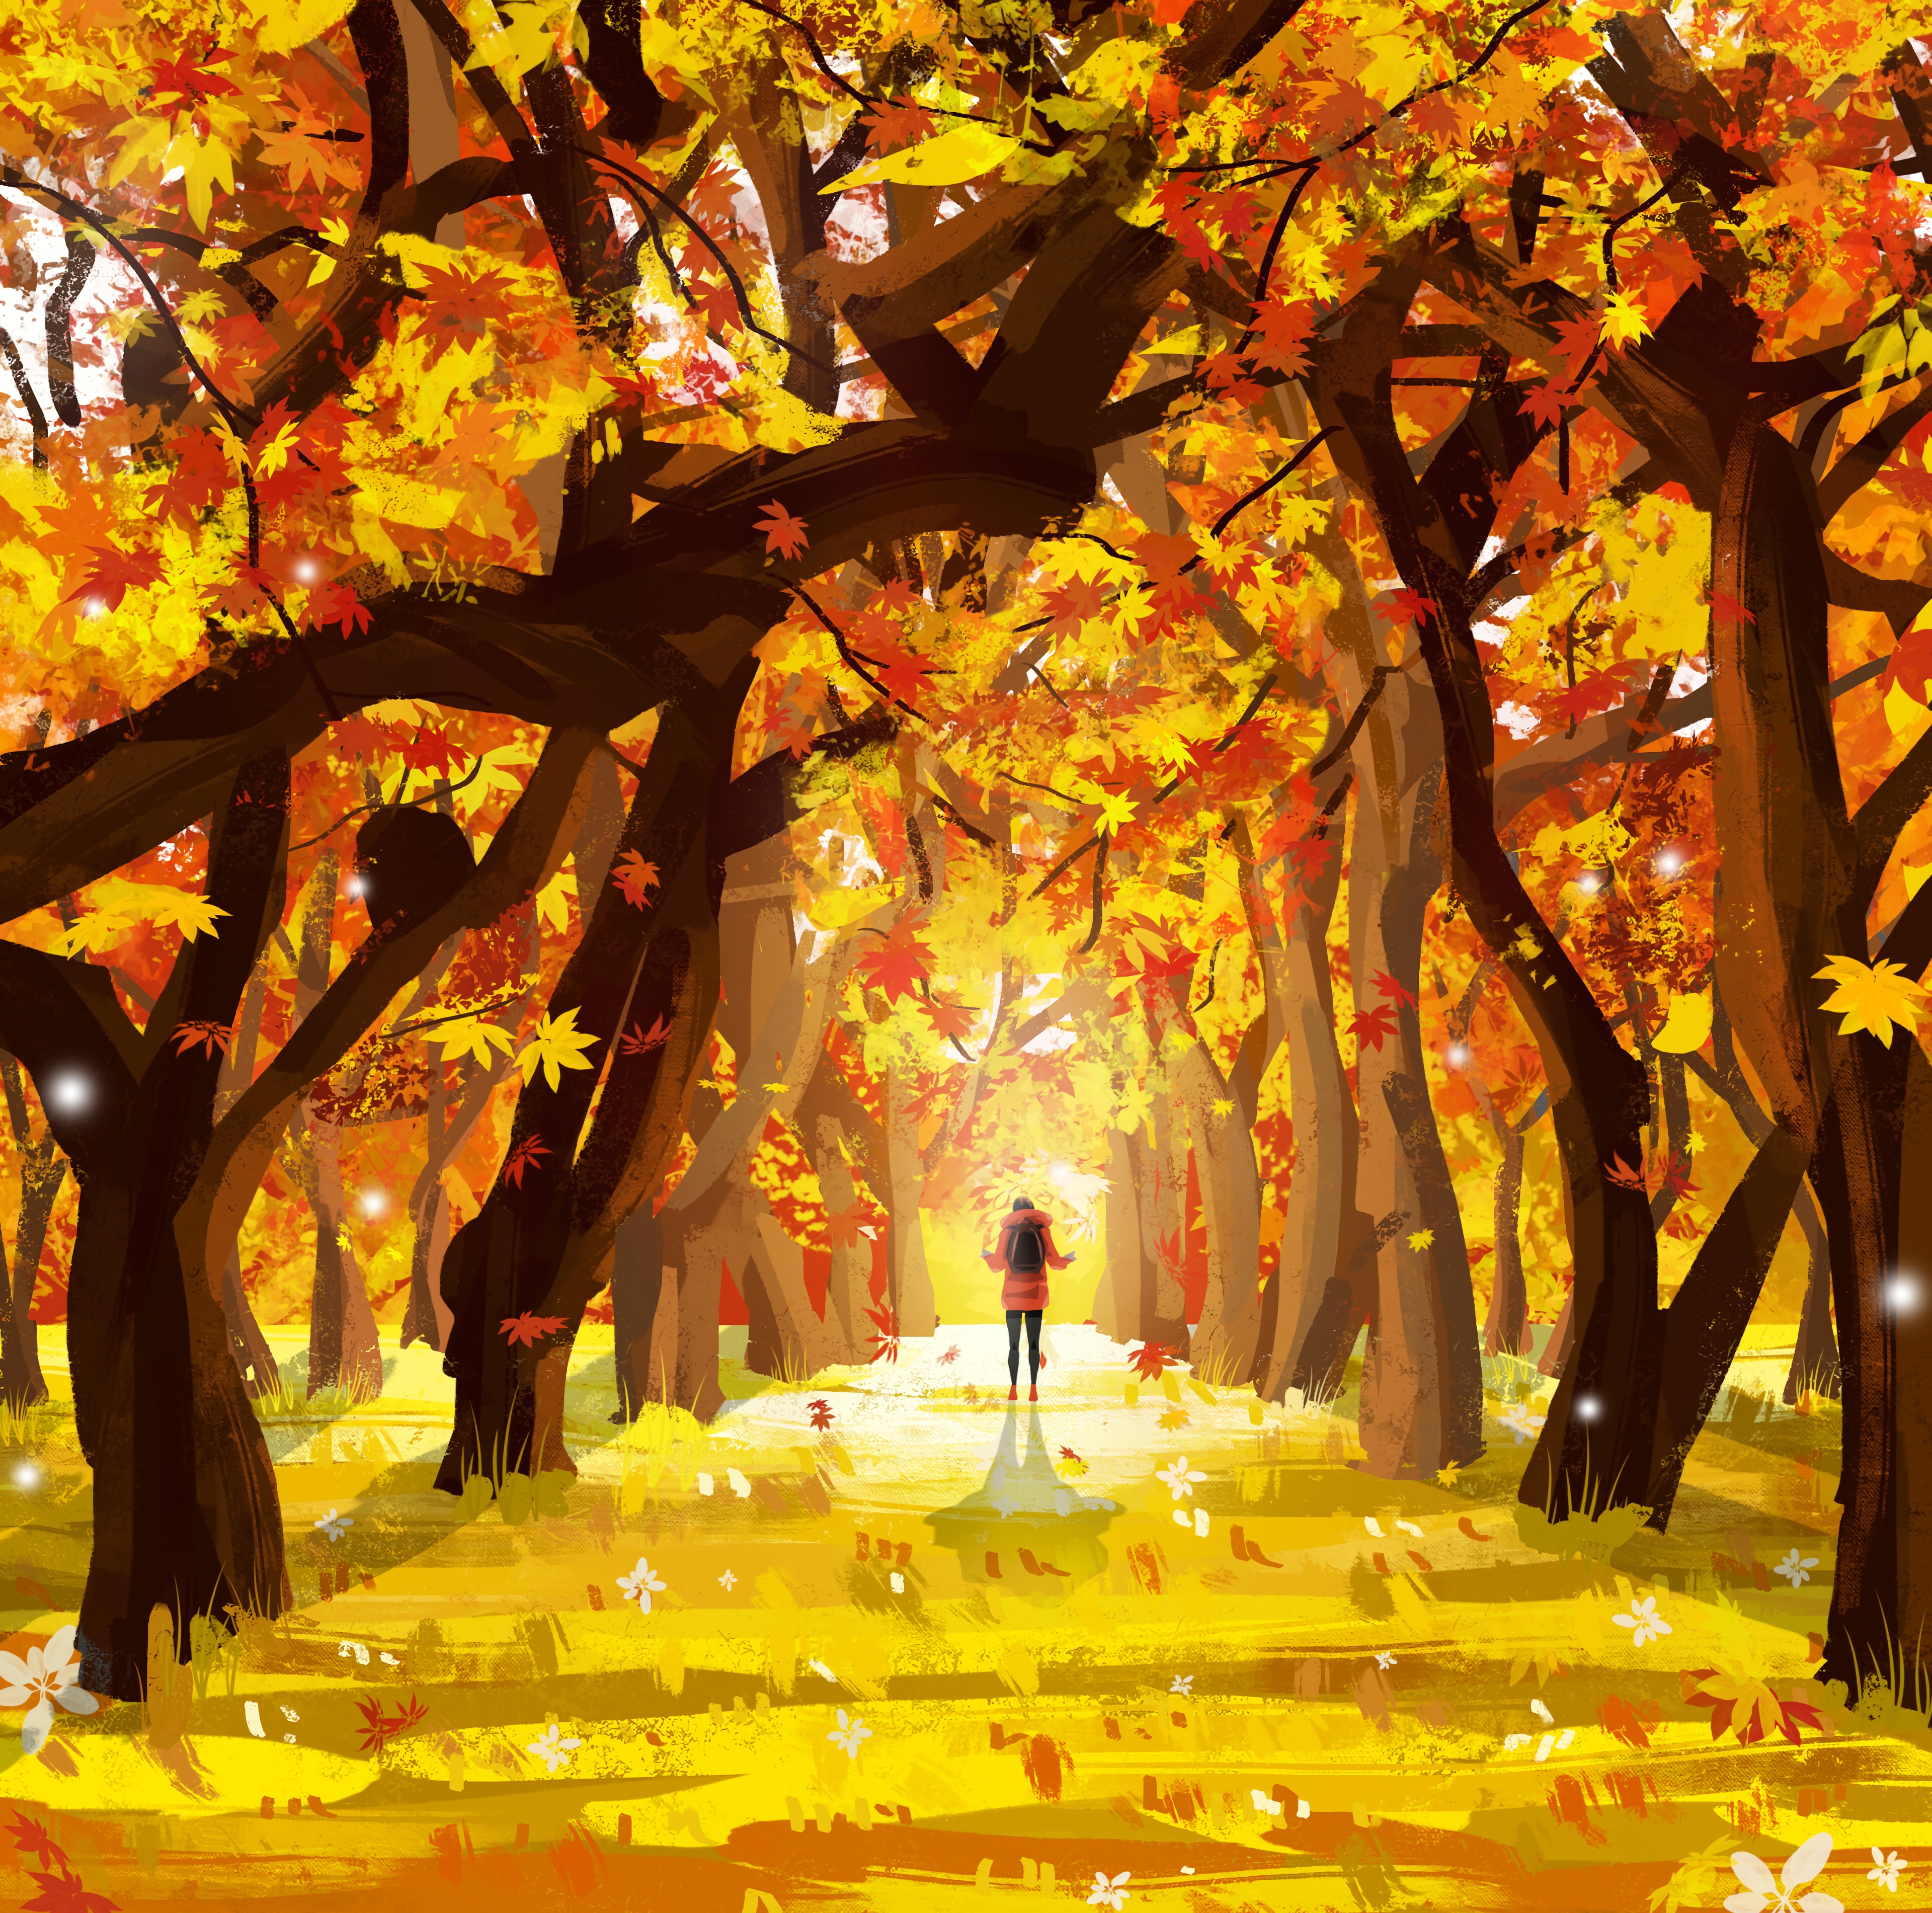 Autumn Anime - Other & Anime Background Wallpapers on Desktop Nexus (Image  281551)